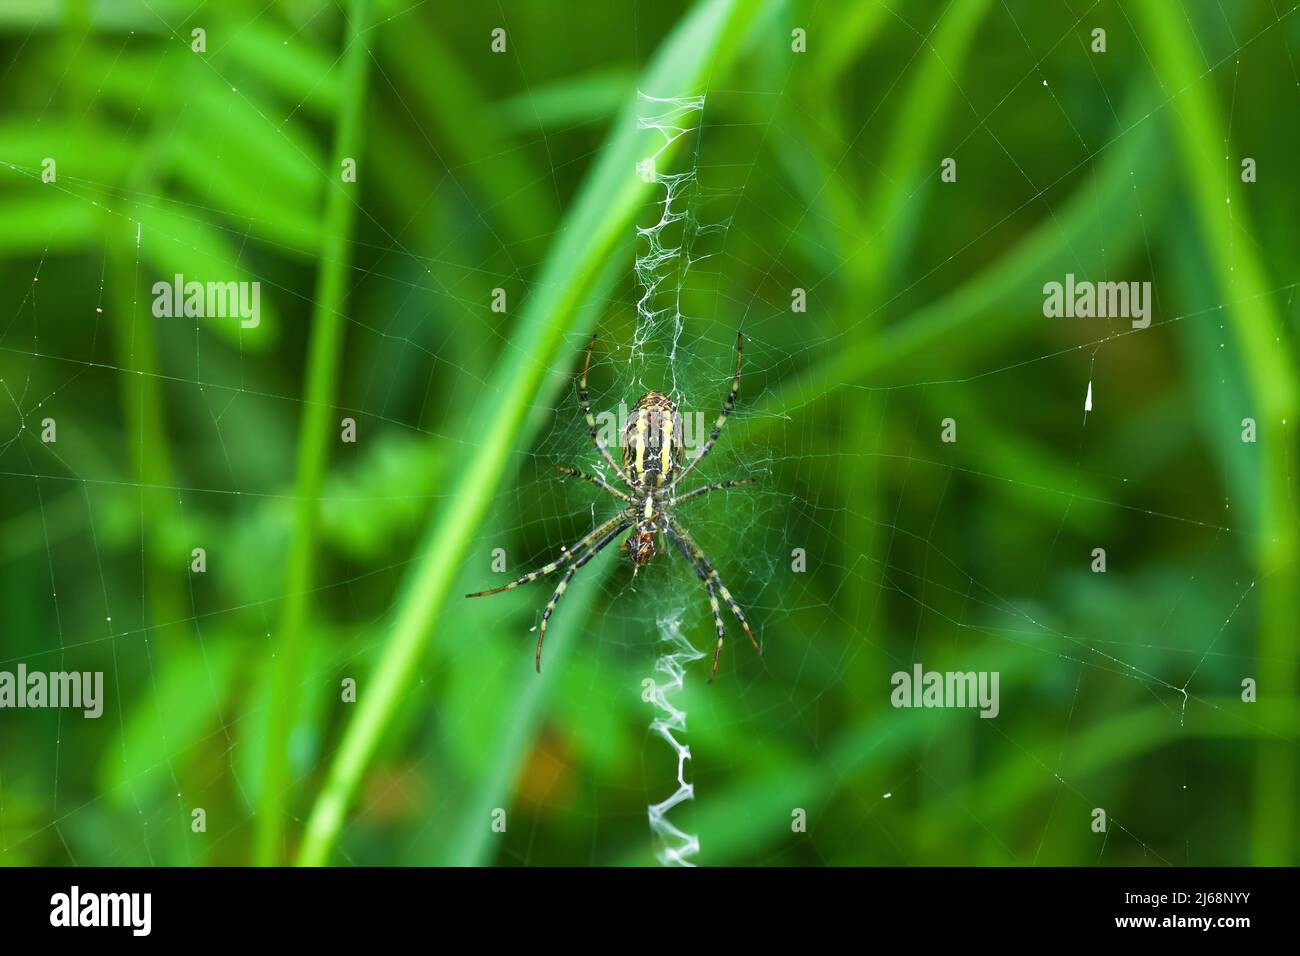 Wasp spider on cobweb with stabilimentum. Argiope bruennichi on web in grass. Striped female arachnid on zig-zag spiderweb by green blurry background, Stock Photo